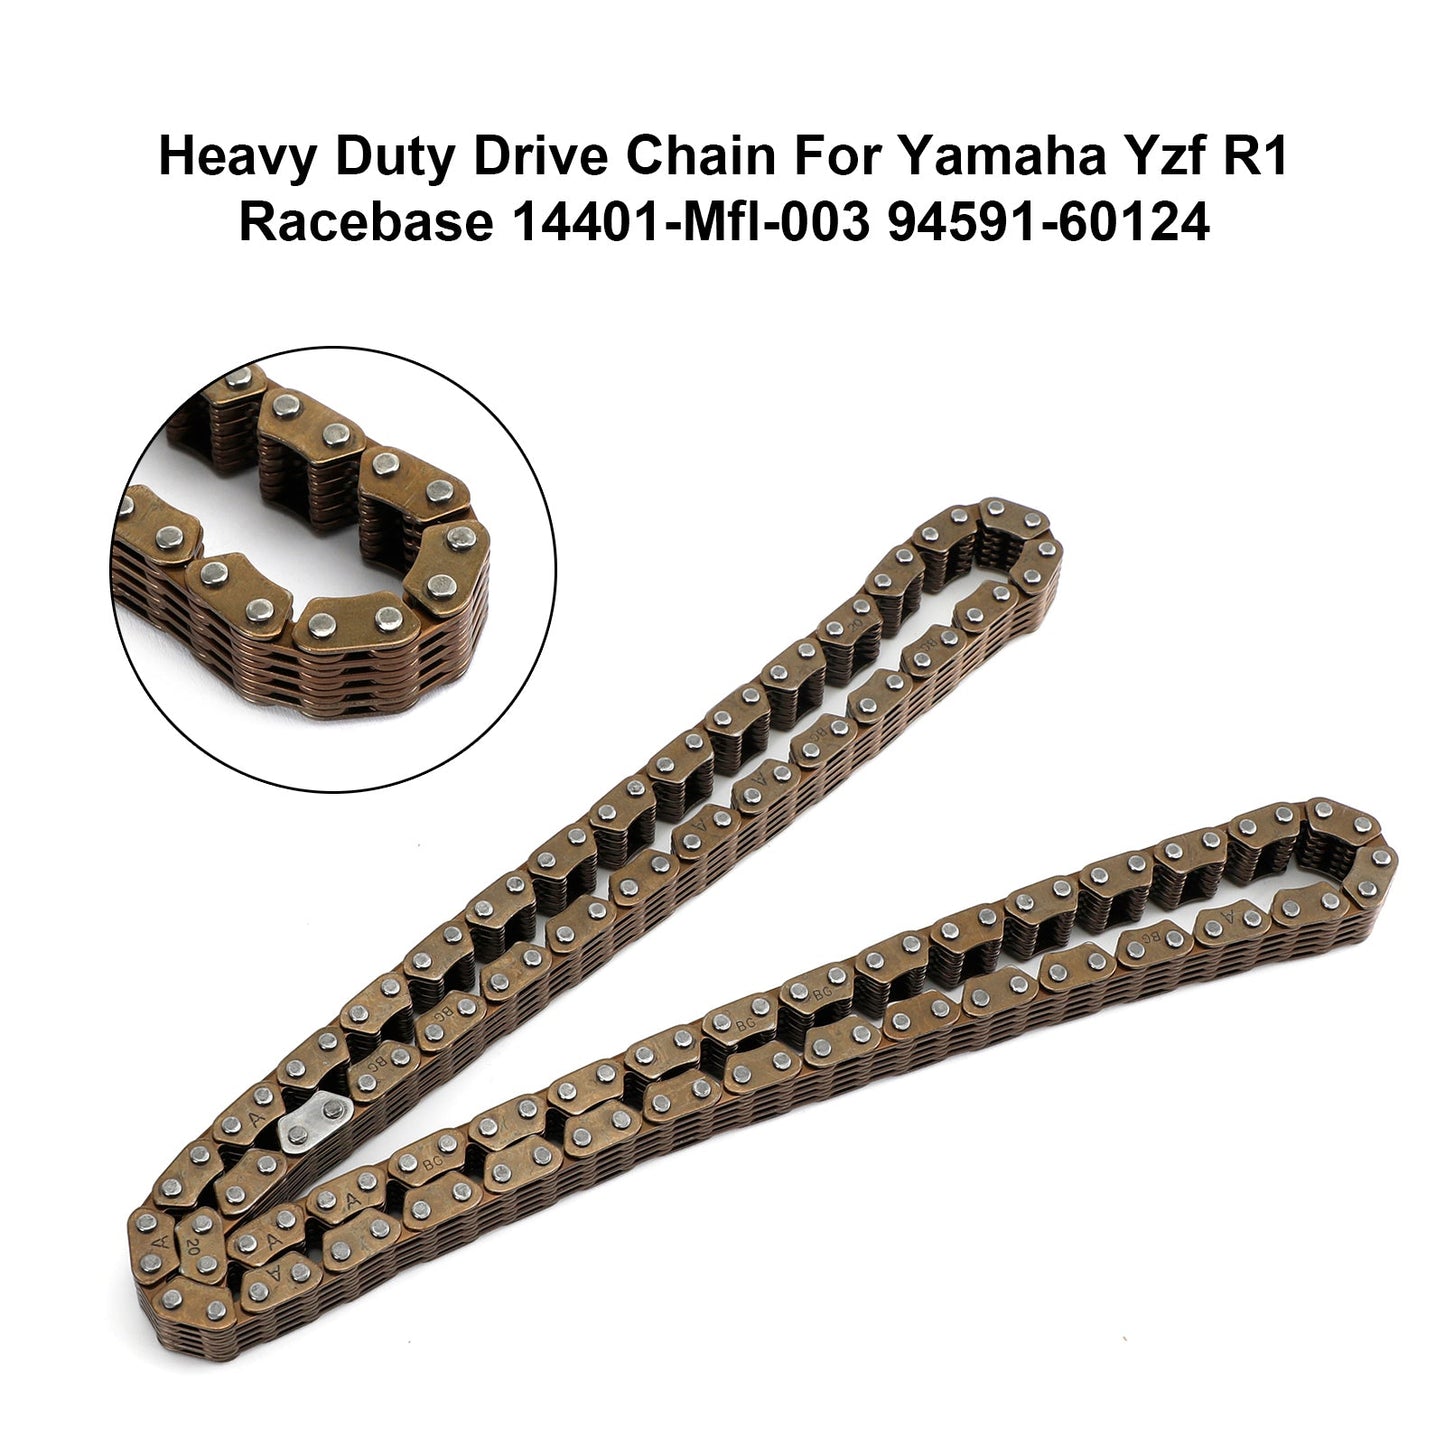 Yamaha Yzf R1 Racebase 14401-Mfl-003 94591-60124 Chaîne de distribution lourde